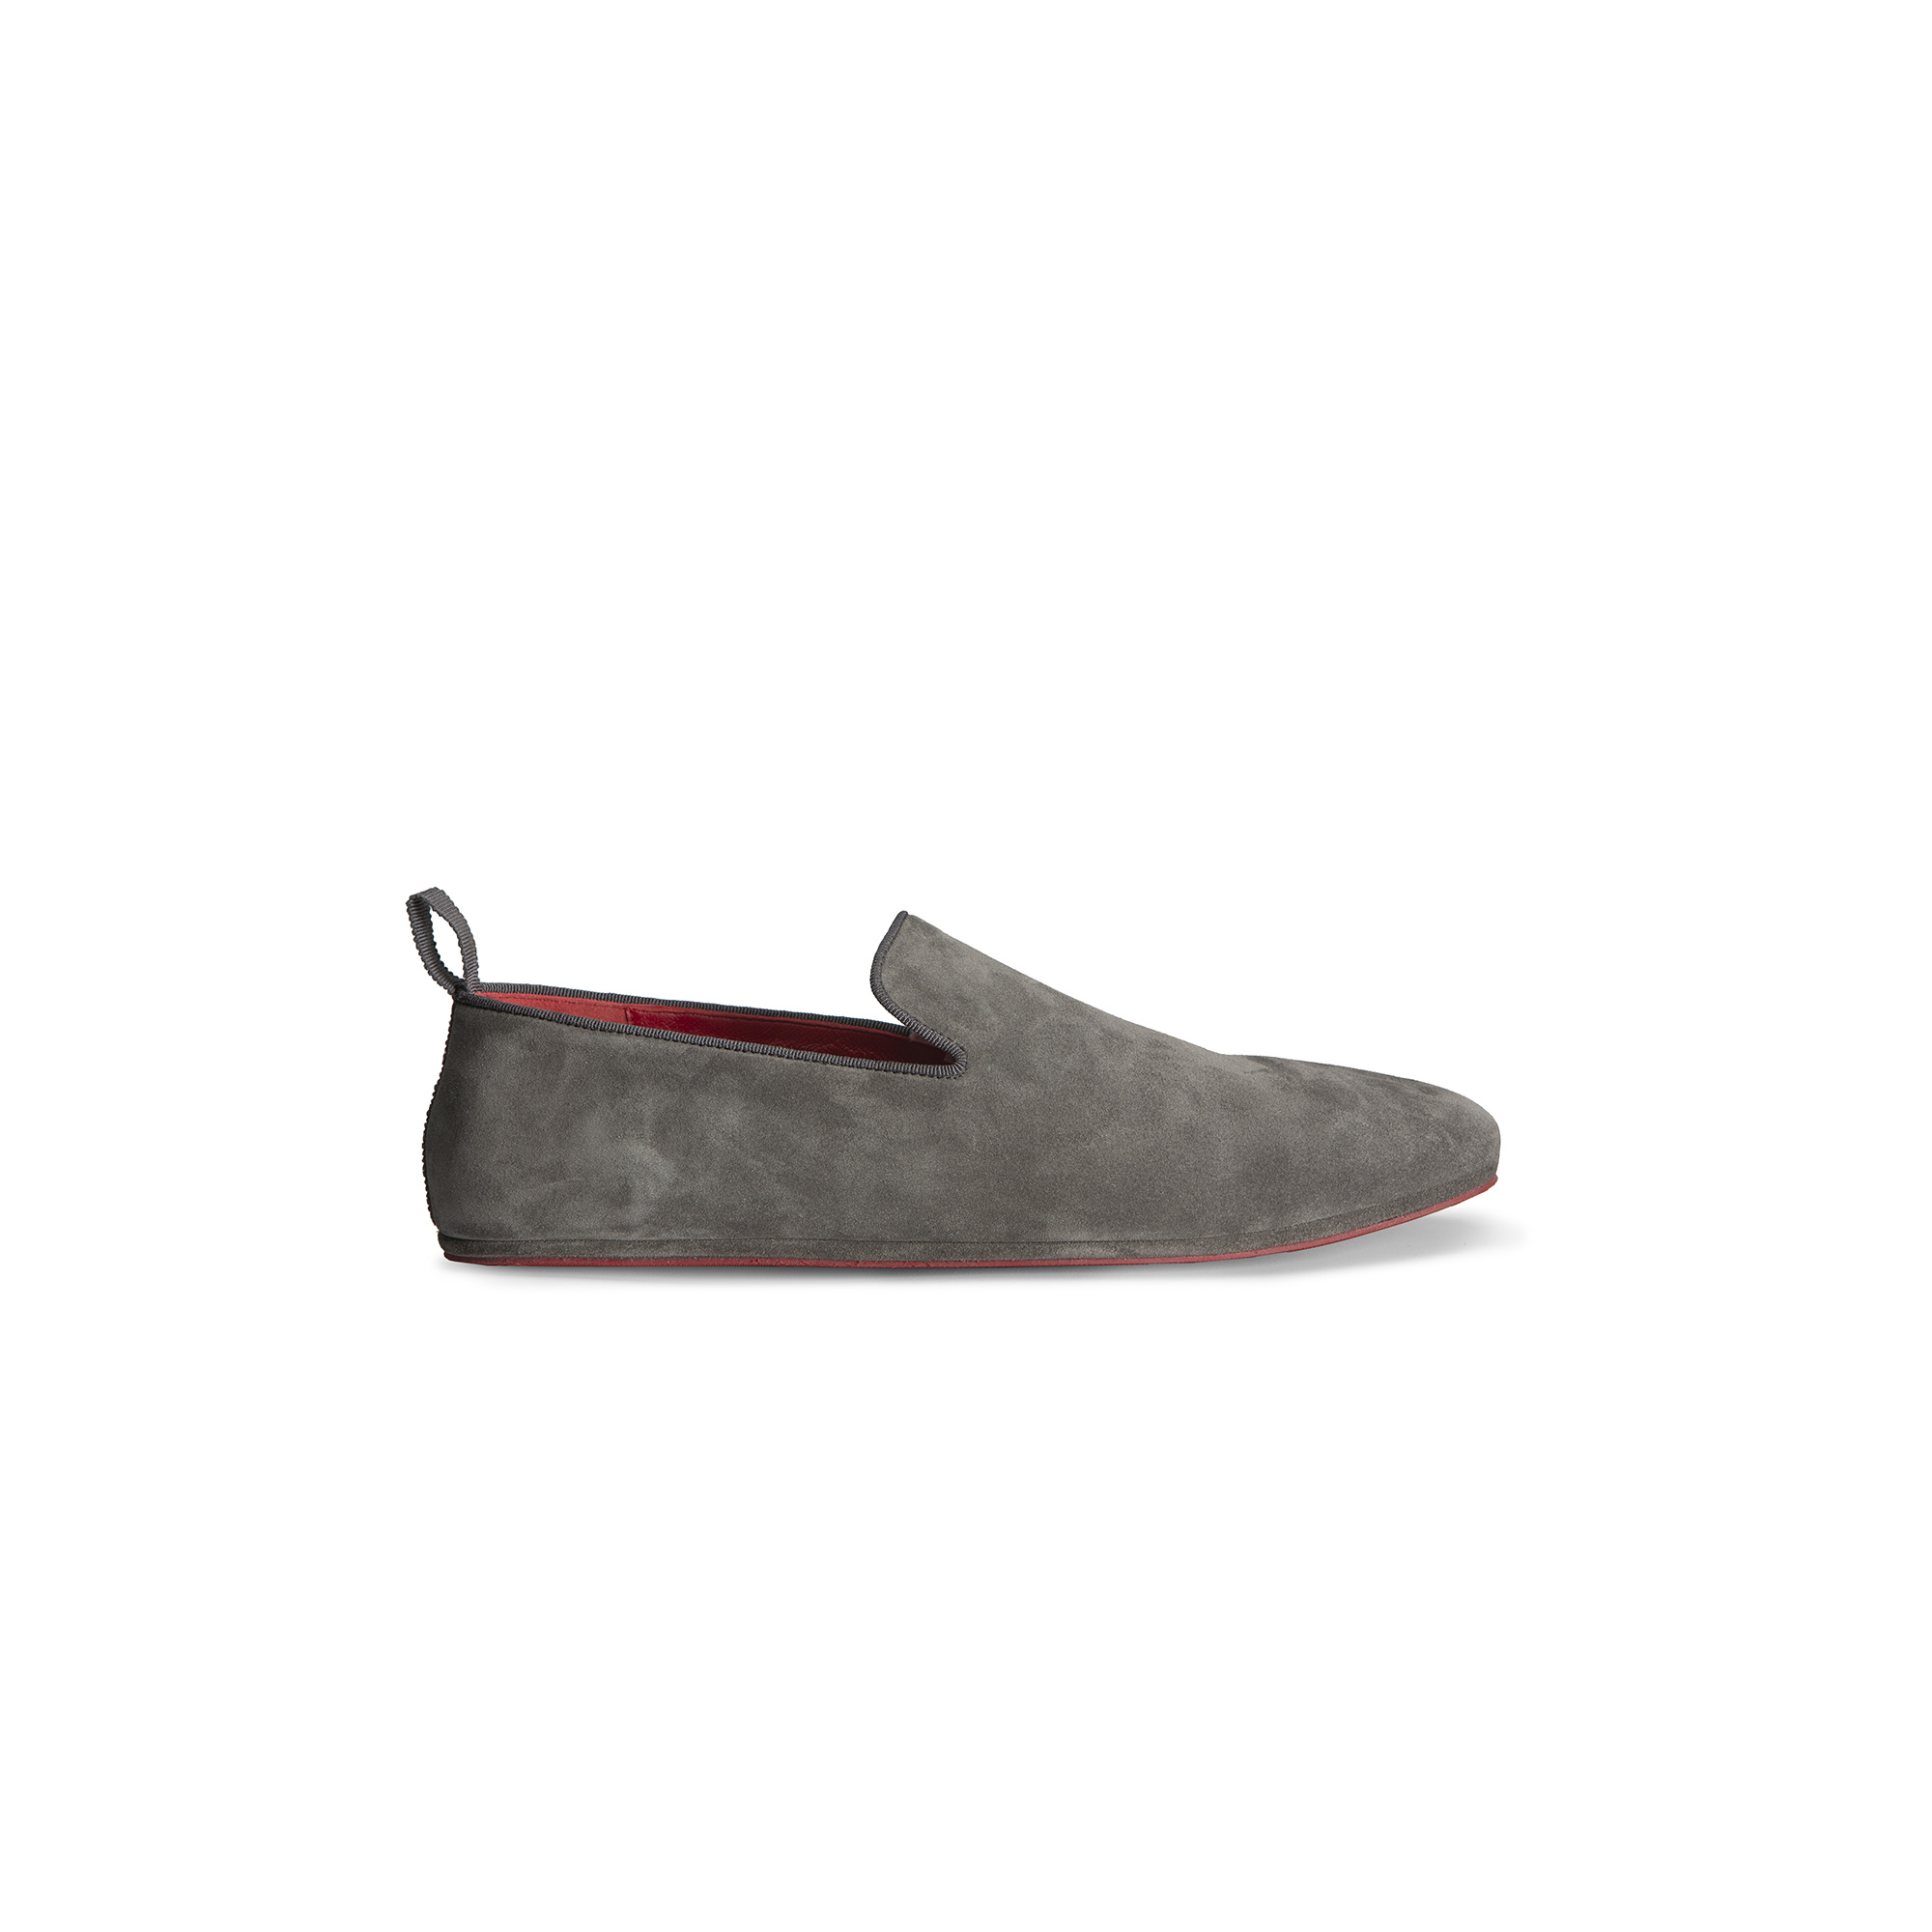 Classic indoor closed coal velour slipper - Farfalla italian slippers